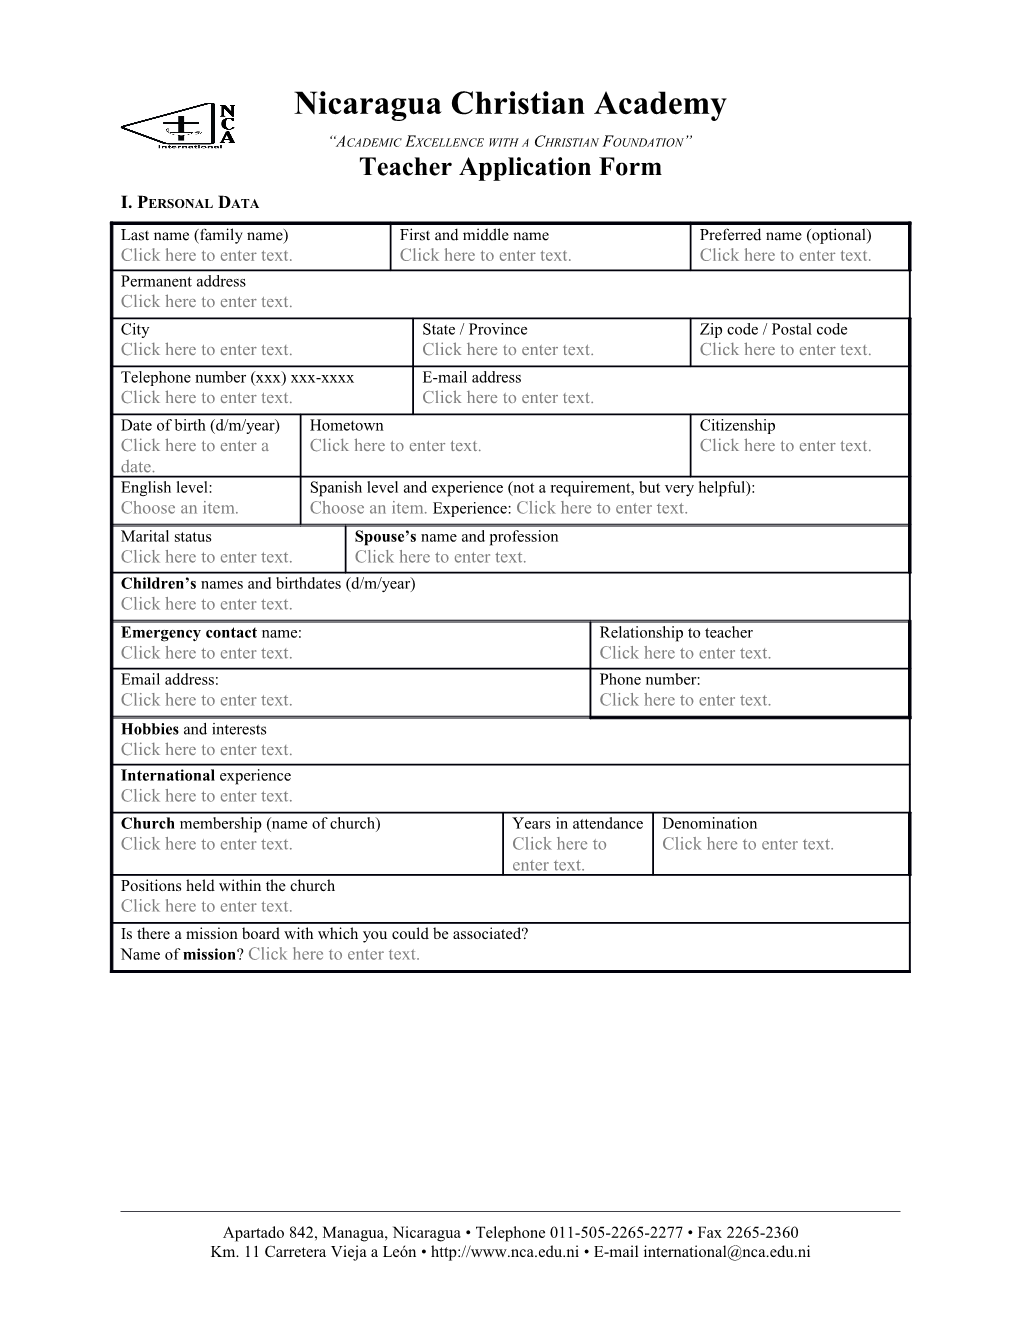 Teacher Application Form s3